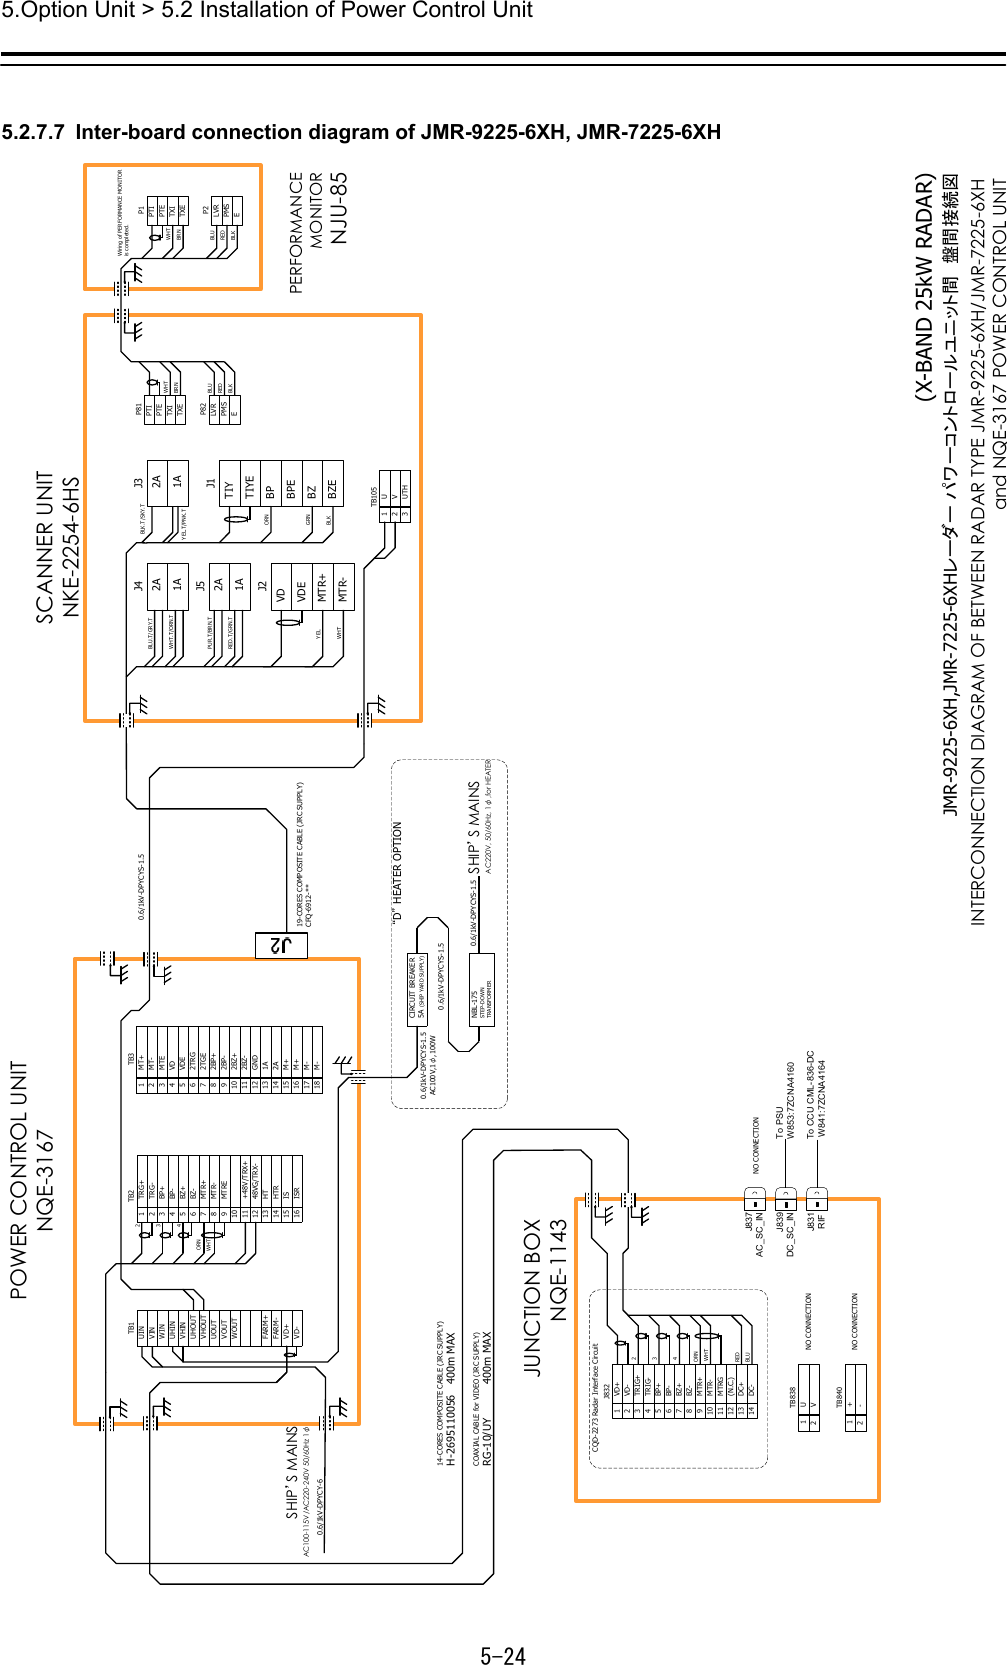 5.Option Unit &gt; 5.2 Installation of Power Control Unit 5-24  5.2.7.7  Inter-board connection diagram of JMR-9225-6XH, JMR-7225-6XH (X-BAND 25kW RADAR)JMR-9225-6XH,JMR-7225-6XHレーダー パワーコントロールユニット間 盤間接続図19-CORES COMPOSITE CABLE (JRC SUPPLY)CFQ-6912-**21MTRE23BZ+4BZ-5TRG+6TRG-7BP+8BP-910MTR+MTR-TB234ORNWHT48VG/TRX-1112+48V/TRX+HTR1314HTISR1516ISVHINUHOUTUINVINWINUHINVHOUTUOUTVOUTWOUTFARM+FARM-VD+VD-TB1 TB3POWER CONTROL UNITNQE-3167SHIP’S MAINSAC100-115V/AC220-240V 50/60Hz 1φ0.6/1kV-DPYCY-6COAXIAL CABLE for VIDEO (JRC SUPPLY)RG-10/UY          400m MAX14-CORES COMPOSITE CABLE (JRC SUPPLY)H-2695110056   400m MAX2A1AJ4J5J22A1AVDVDE2A1AJ3J1PTIPTETXITXELVRPMSEP82P81PTIPTETXITXELVRPMSEP2P1SCANNER UNITNKE-2254-6HSPERFORMANCEMONITORNJU-85WHTBRNBLUREDBLKWHTBRNBLUREDBLKBLK.T/SKY.TYEL.T/PNK.TORNGRNBLKWHTYELPUR.T/BRN.TRED.T/GRN.TWHT.T/ORN.TBLU.T/GRY.T123UVUTHTB105CIRCUIT BREAKER5A (SHIP YARD SUPPLY)0.6/1kV-DPYCYS-1.5AC100V,1φ,100WNBL-175STEP-DOWN TRANSFORMER0.6/1kV-DPYCYS-1.50.6/1kV-DPYCYS-1.5 SHIP’S MAINSAC220V, 50/60Hz, 1φ,for HEATER“D”HEATER OPTIONWiring of PERFORMANCE MONITORis completed.0.6/1kV-DPYCYS-1.5INTERCONNECTION DIAGRAM OF BETWEEN RADAR TYPE JMR-9225-6XH/JMR-7225-6XHand NQE-3167 POWER CONTROL UNIT12BP-23VDE42TRG5MT+6MT-7MTE8VD9102TGE2BP+GND11122BZ-2A13141AM+1516M+2BZ+M-1718M-MTR+MTR-TIYTIYEBPBPEBZBZE1VD+2VD-3TRIG+4TRIG-5BP+6BP-7BZ+8BZ-9MTR+10 MTR-11 MTRG12 (N.C.)13 DC+14 DC-J832JUNCTION BOXNQE-1143CQD-2273 Radar Interface CircuitNO CONNECTIONREDBLU3ORNWHT24TB8382 V1 UNO CONNECTIONTB8402 -1 +J837J839J831RIFDC_SC_INAC_SC_INTo PSU W853:7ZCNA4160To CCU CML-836-DCW841:7ZCNA4164NO CONNECTION